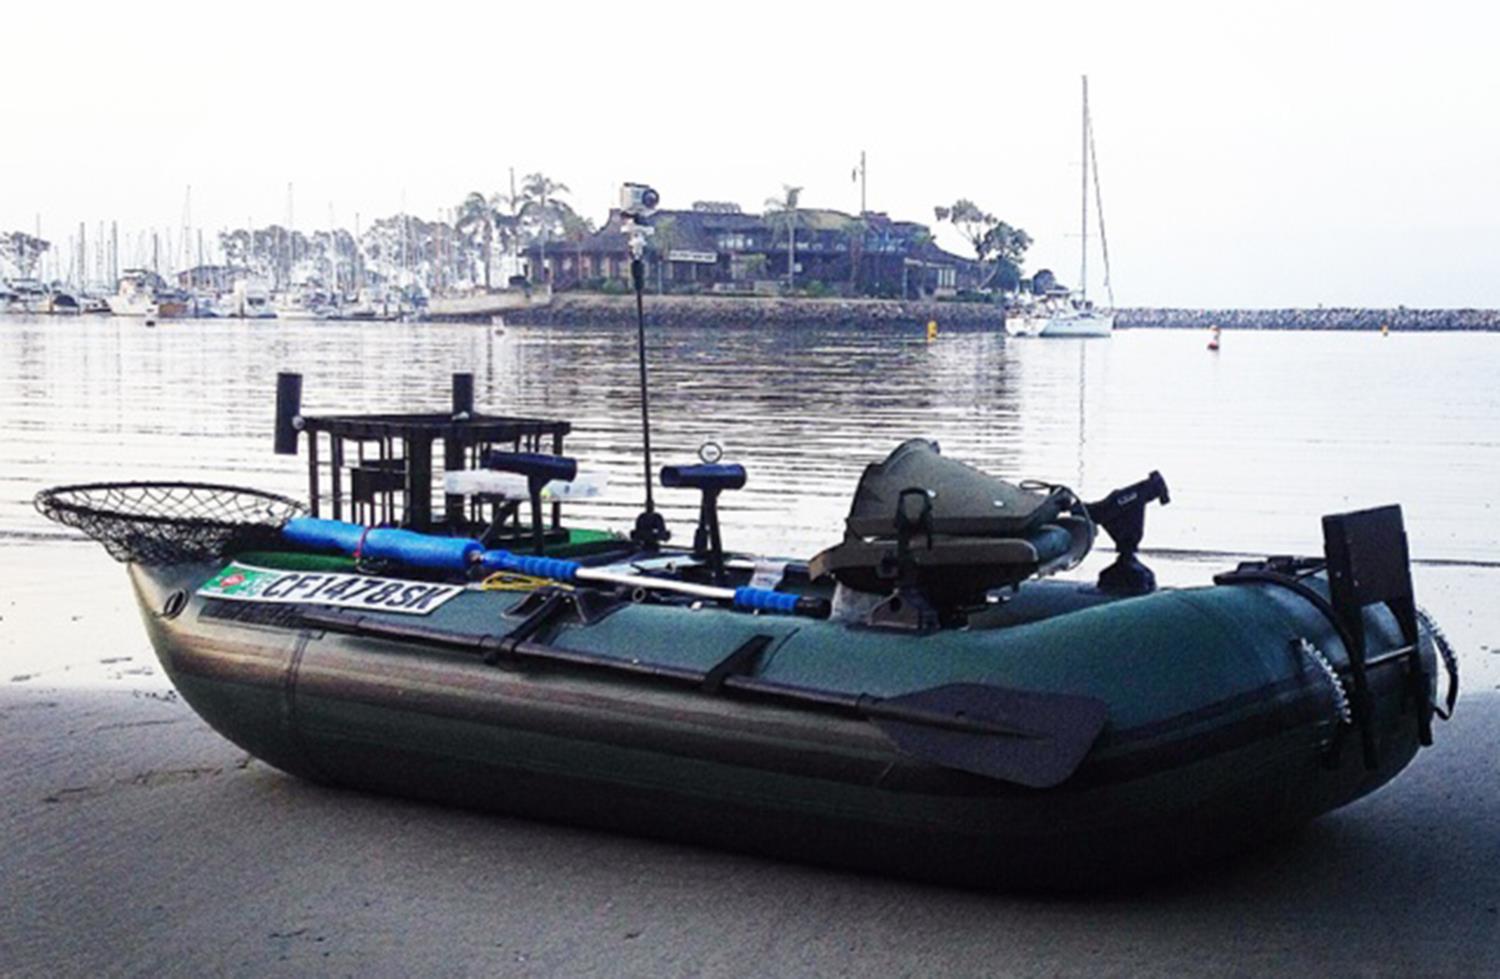 Sea Eagle 285 Inflatable Frameless Pontoon Boat - Pro Package